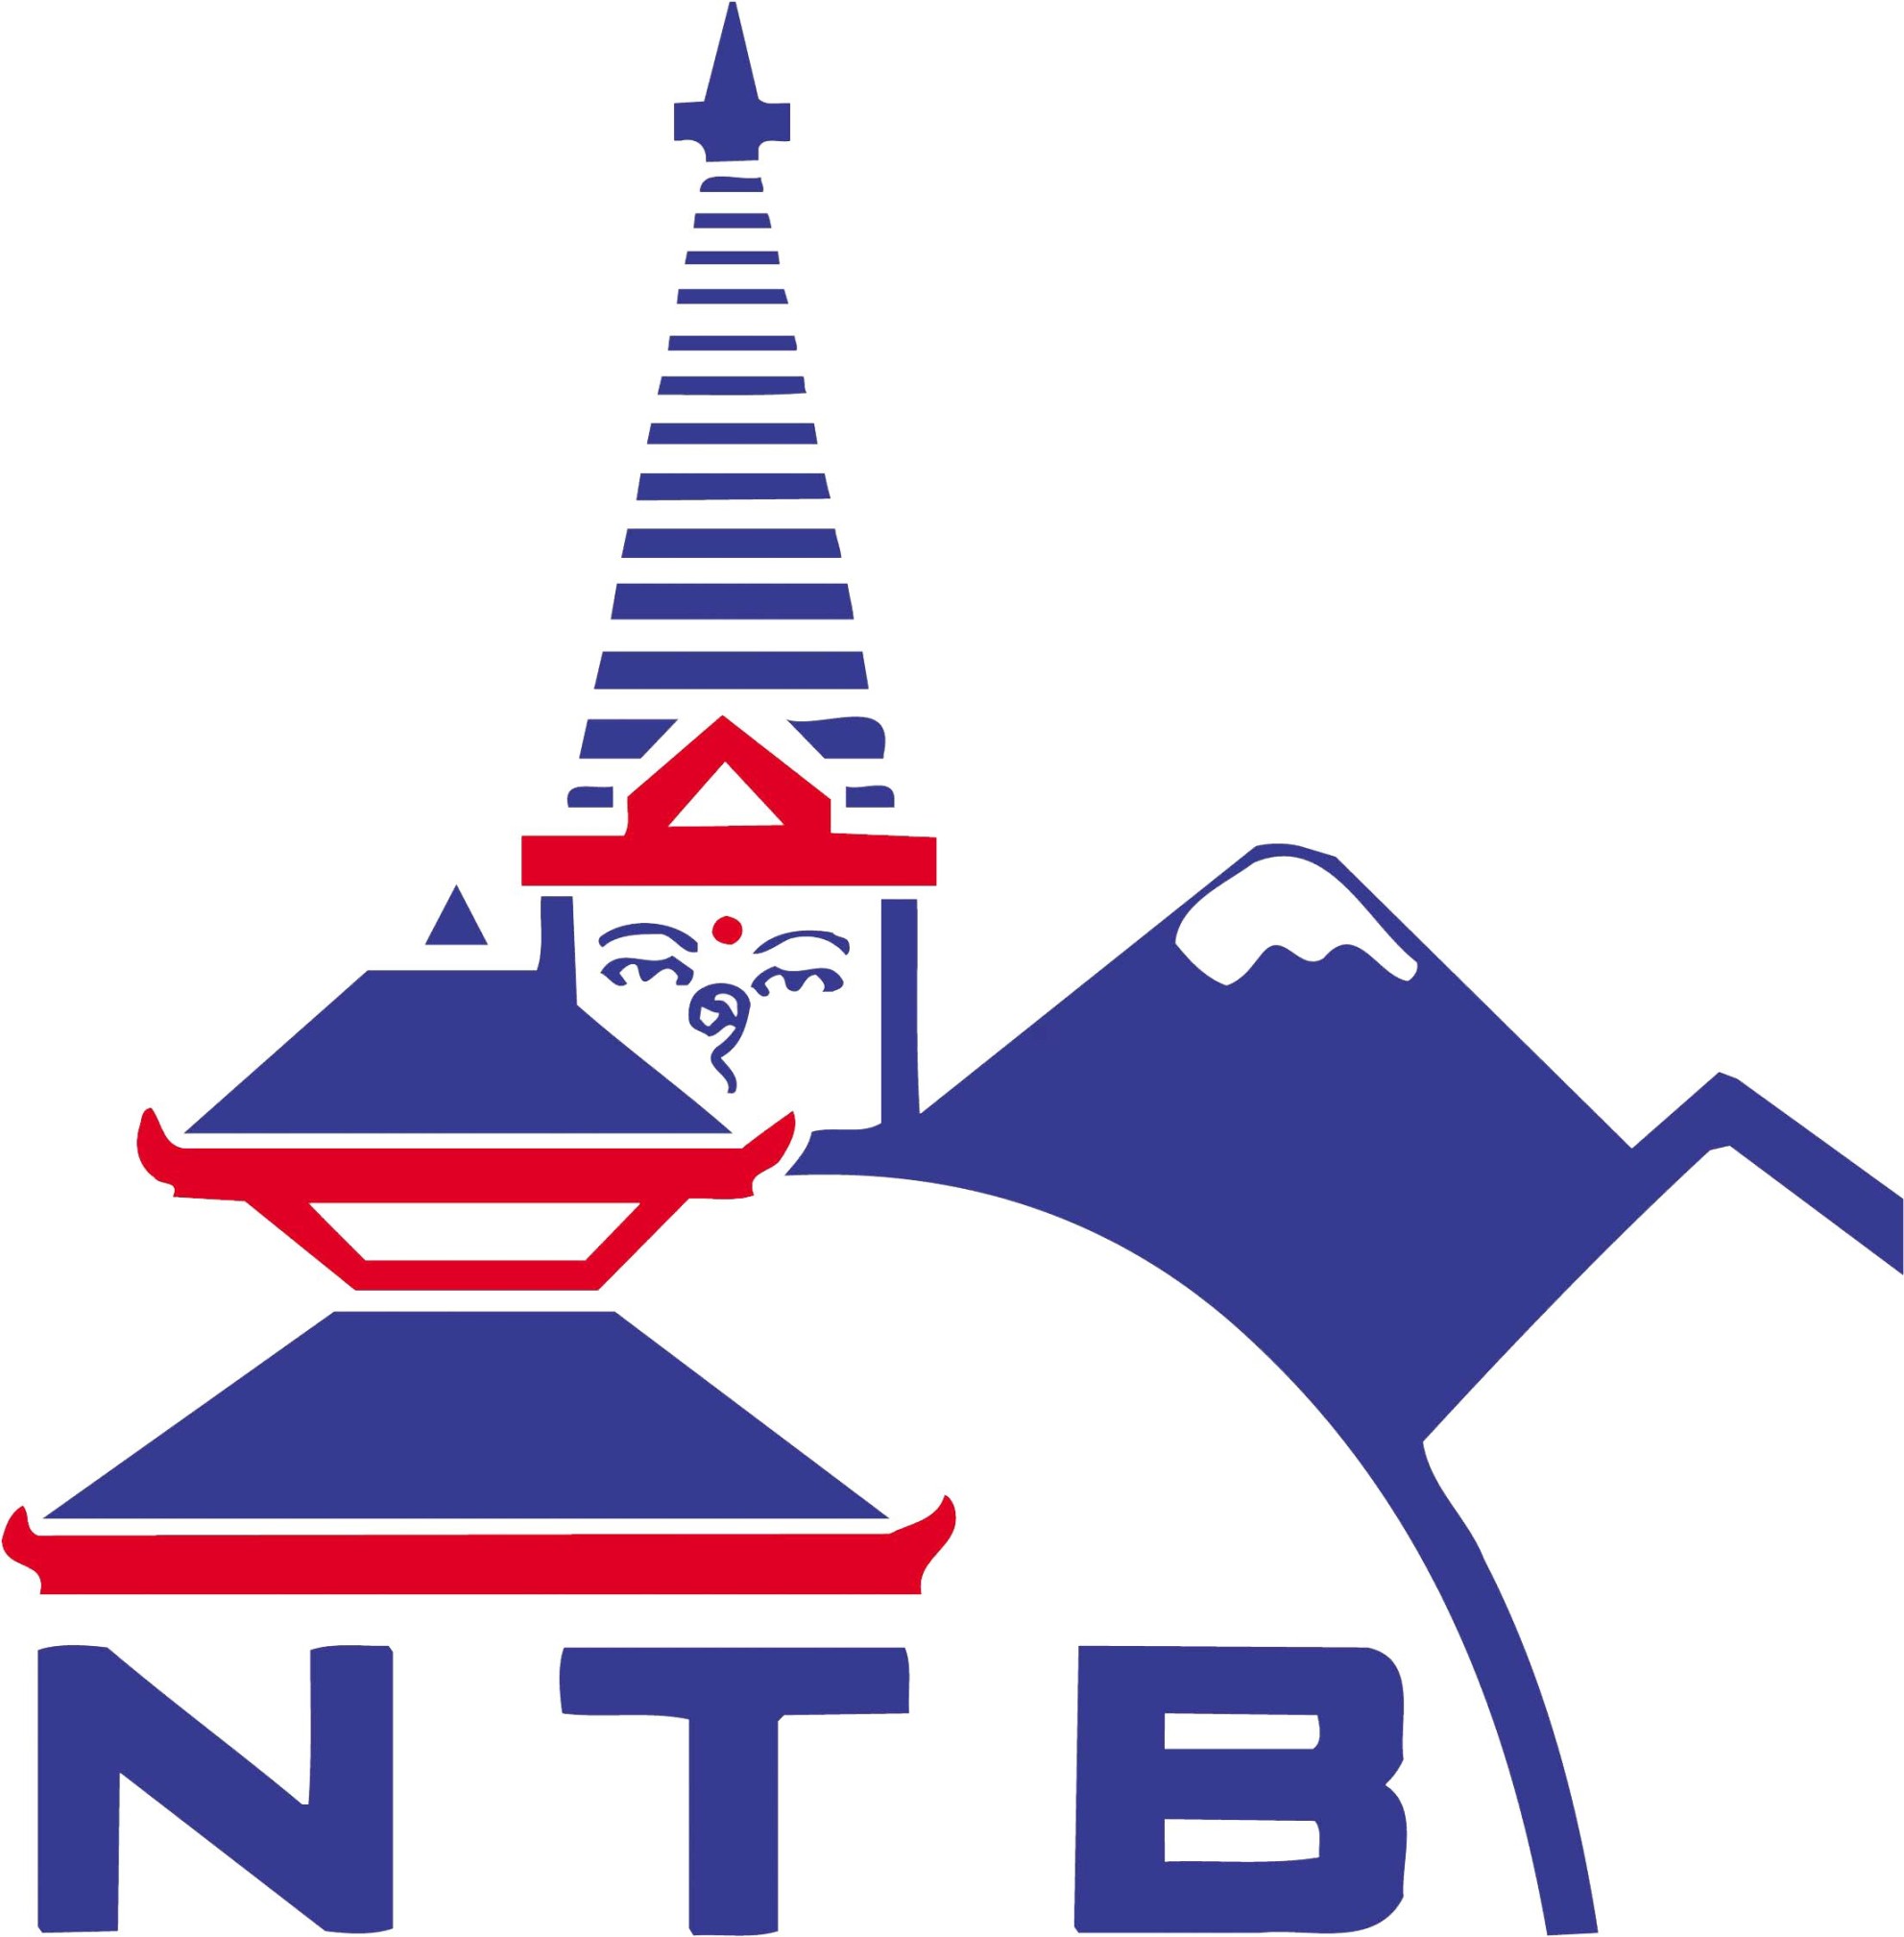 nepal tourism poster